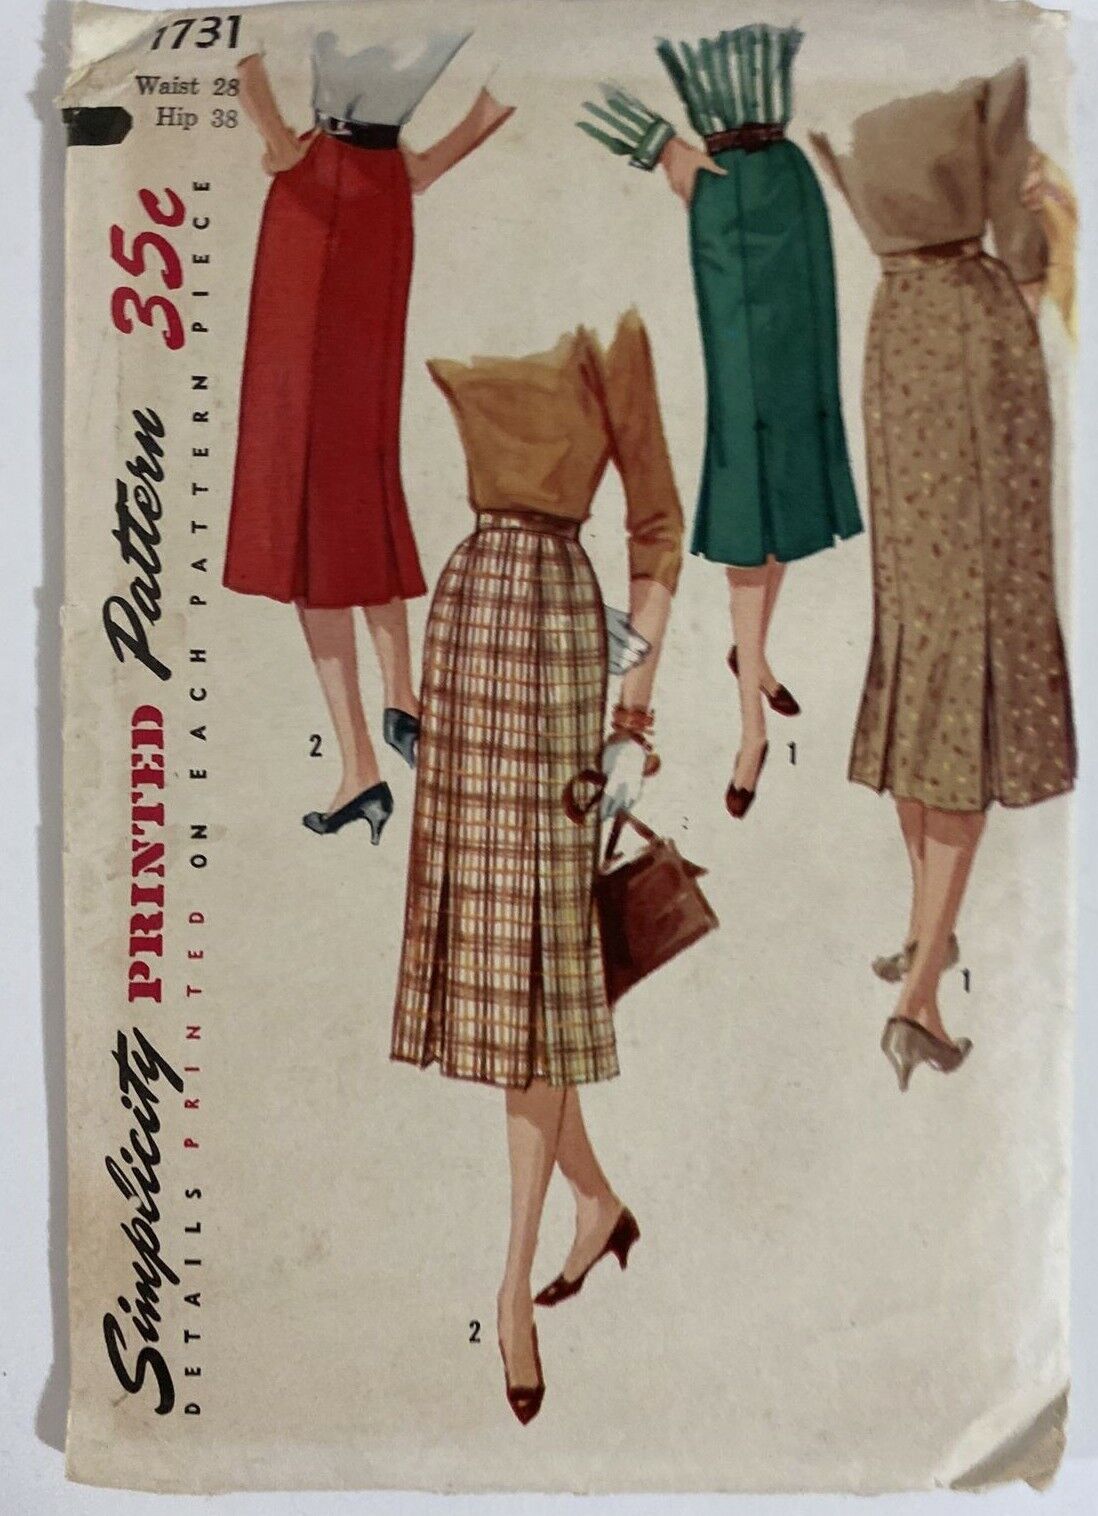 1940\'s VINTAGE SEWING PATTERN SIMPLICITY 1731 Misses Skirt Waist 28 Hip 38 UNCUT